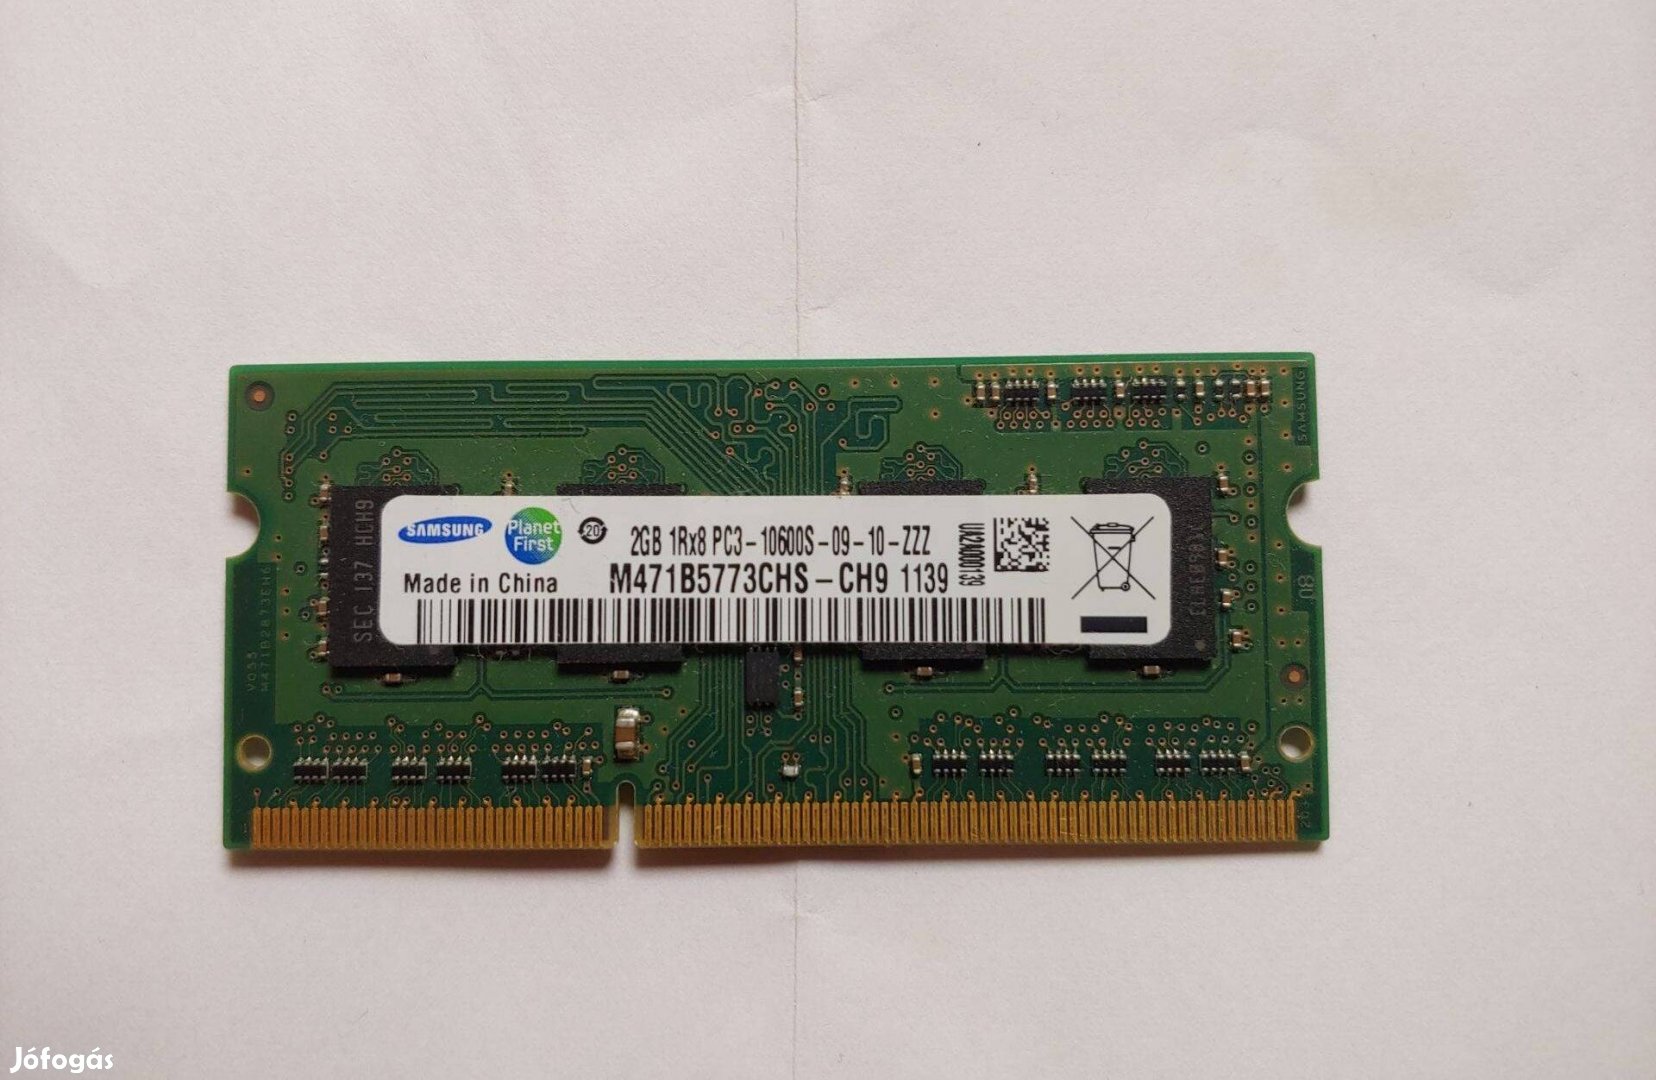 Samsung 2 Gbyte DDR3 Sodimm (laptop) memória